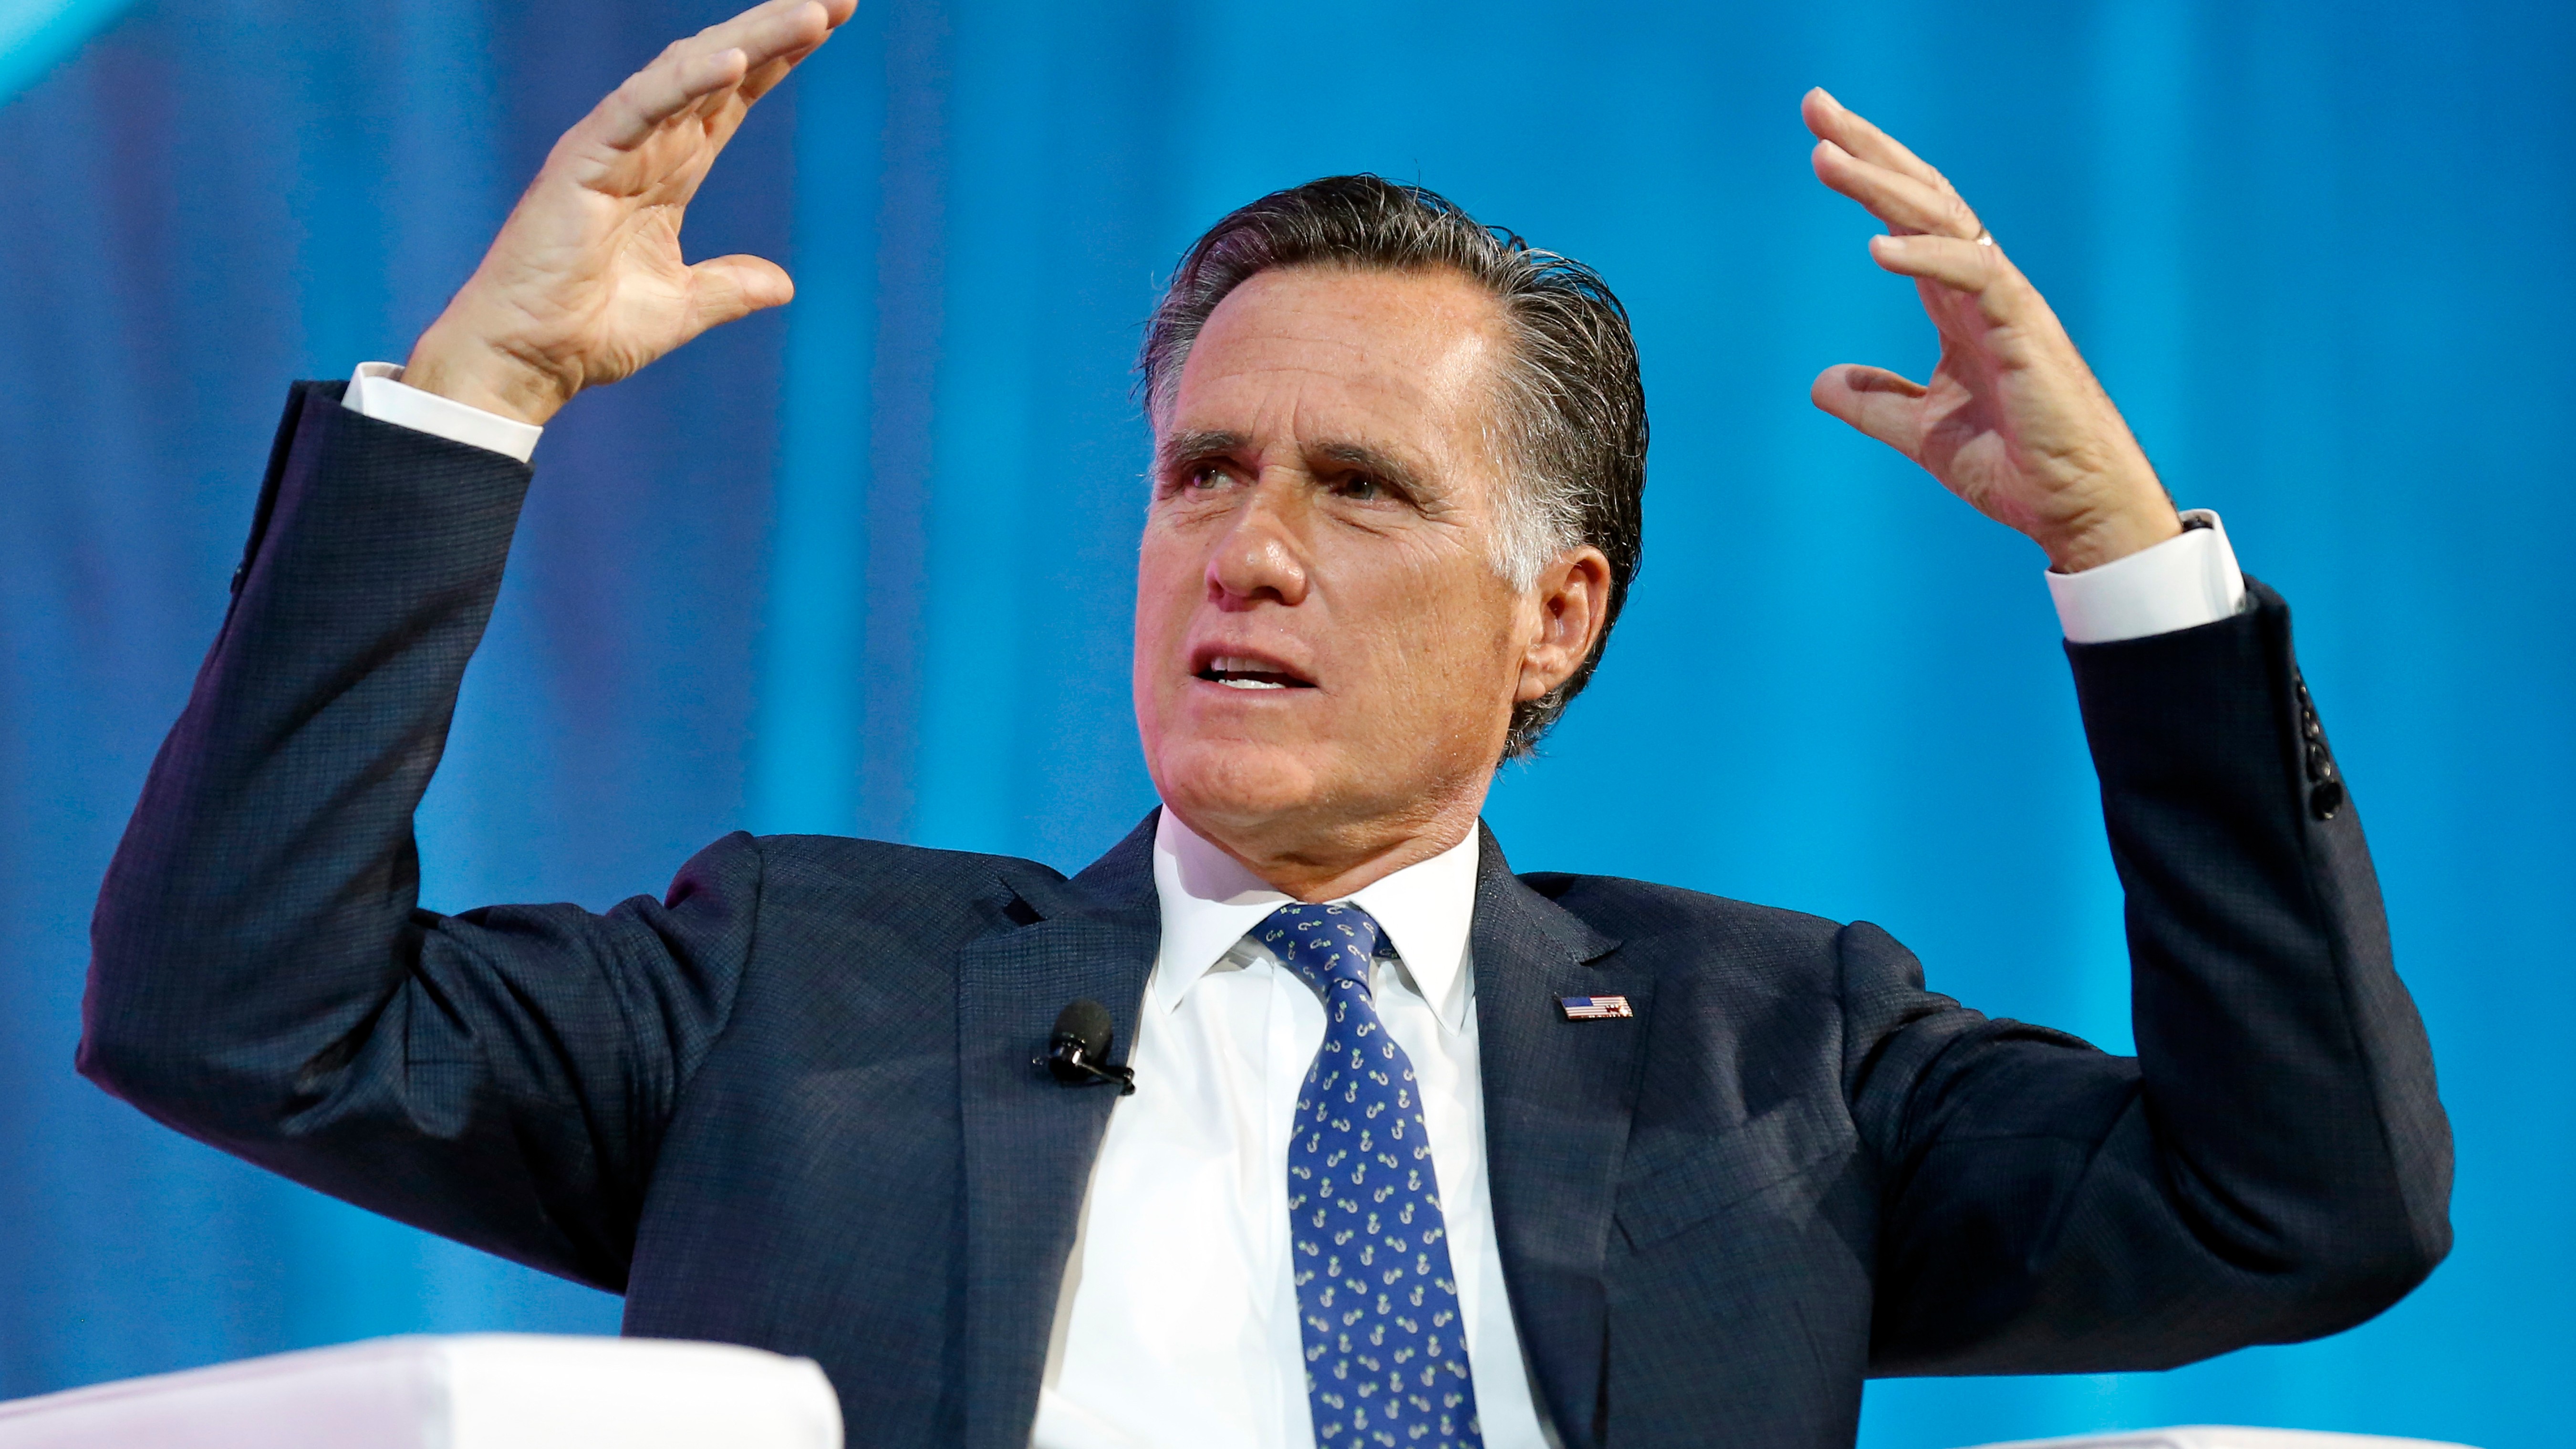 Mitt Romney kicked off his Senate bid with some shots at Trump – VICE News